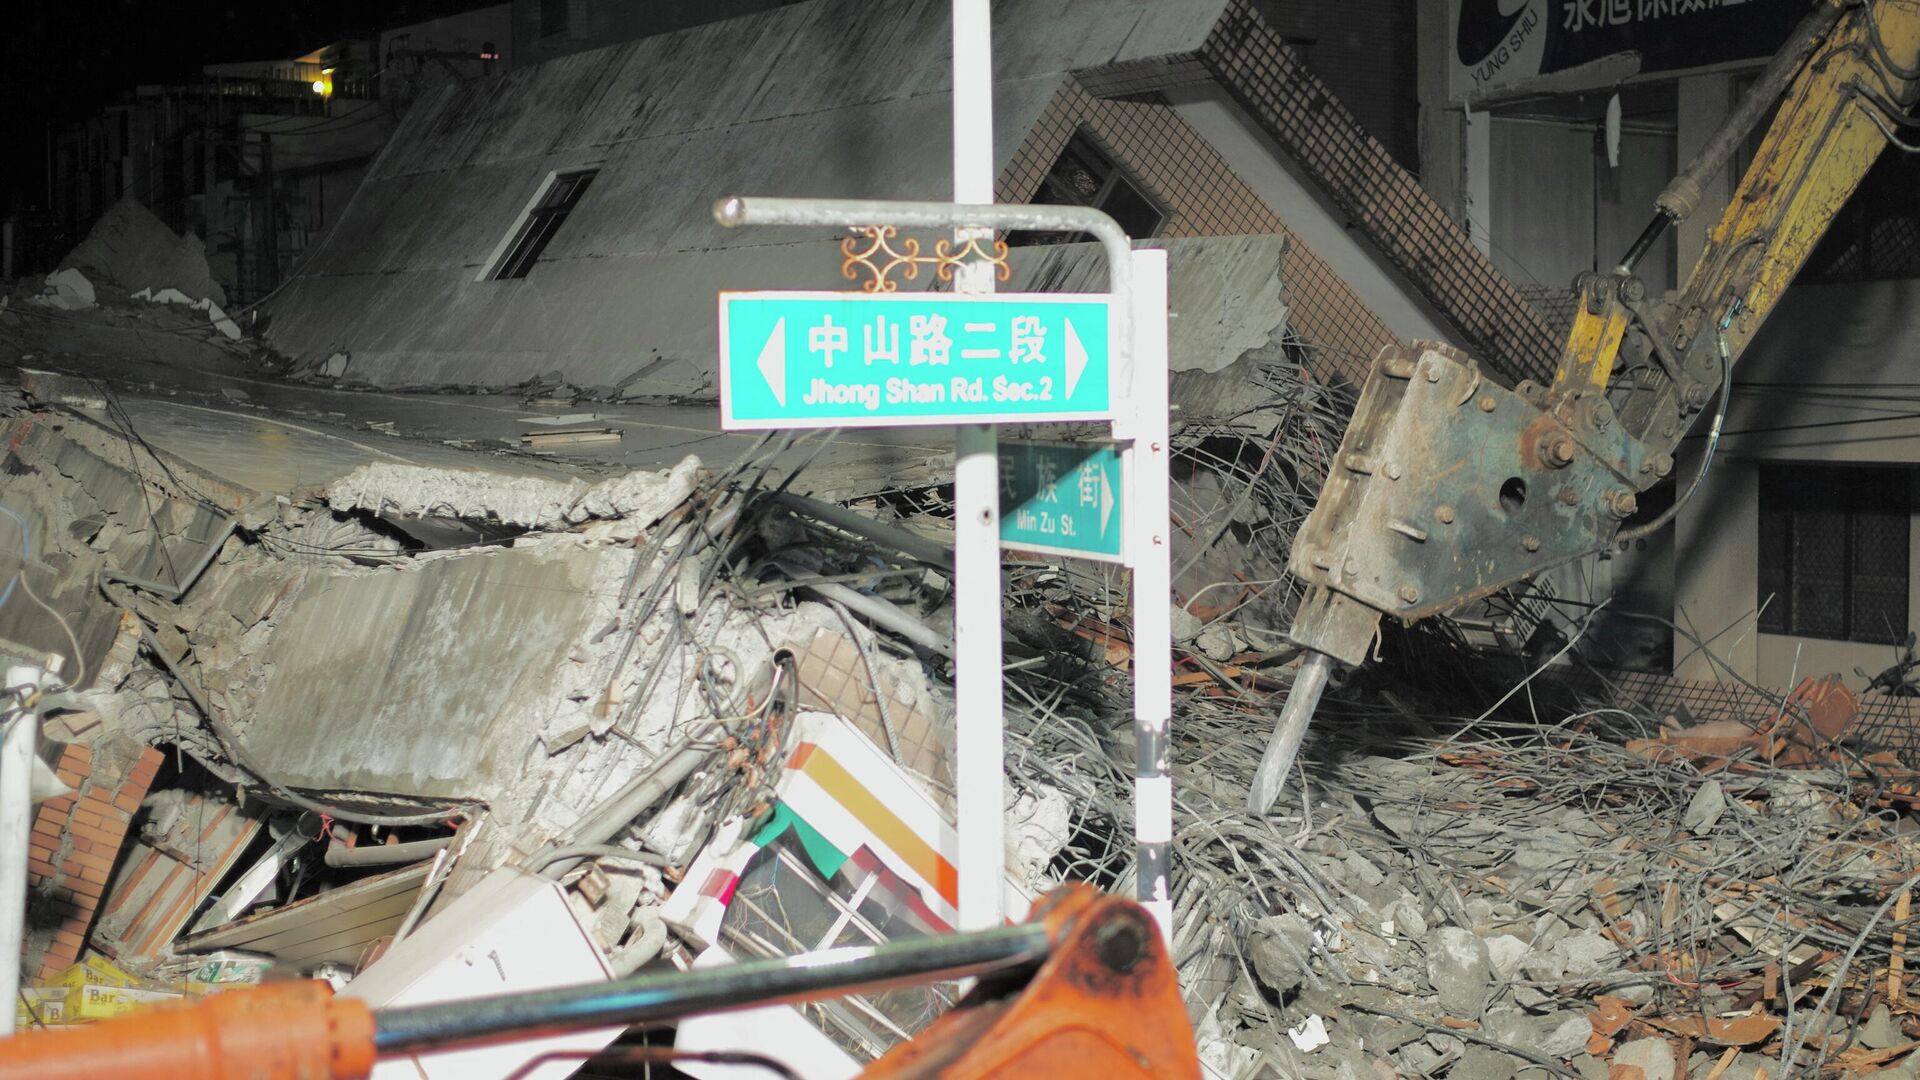 Taiwan earthquake: Powerful photos show scale of devastation in Tainan